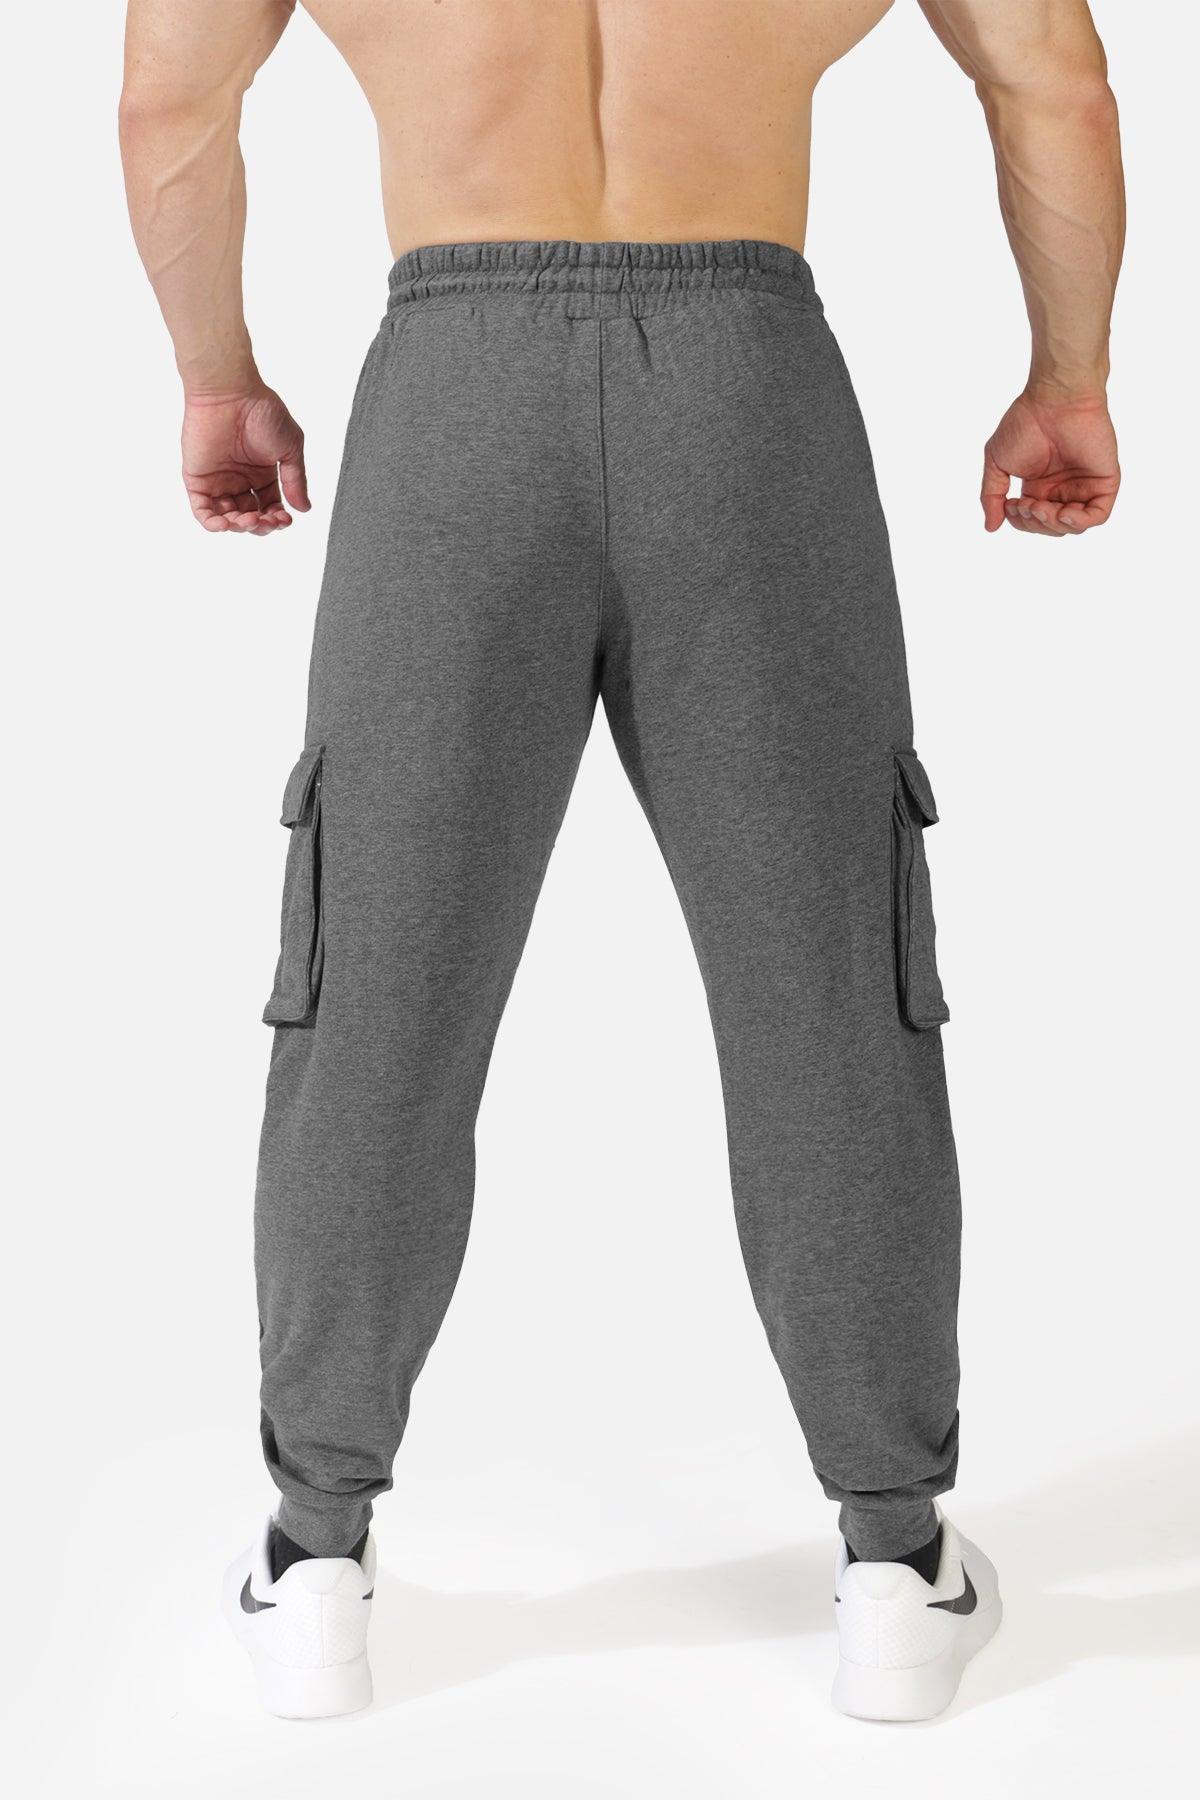 Hollister Skinny Joggers Sweatpants W/ Drawstrings Gray Tapered Men's XS NEW